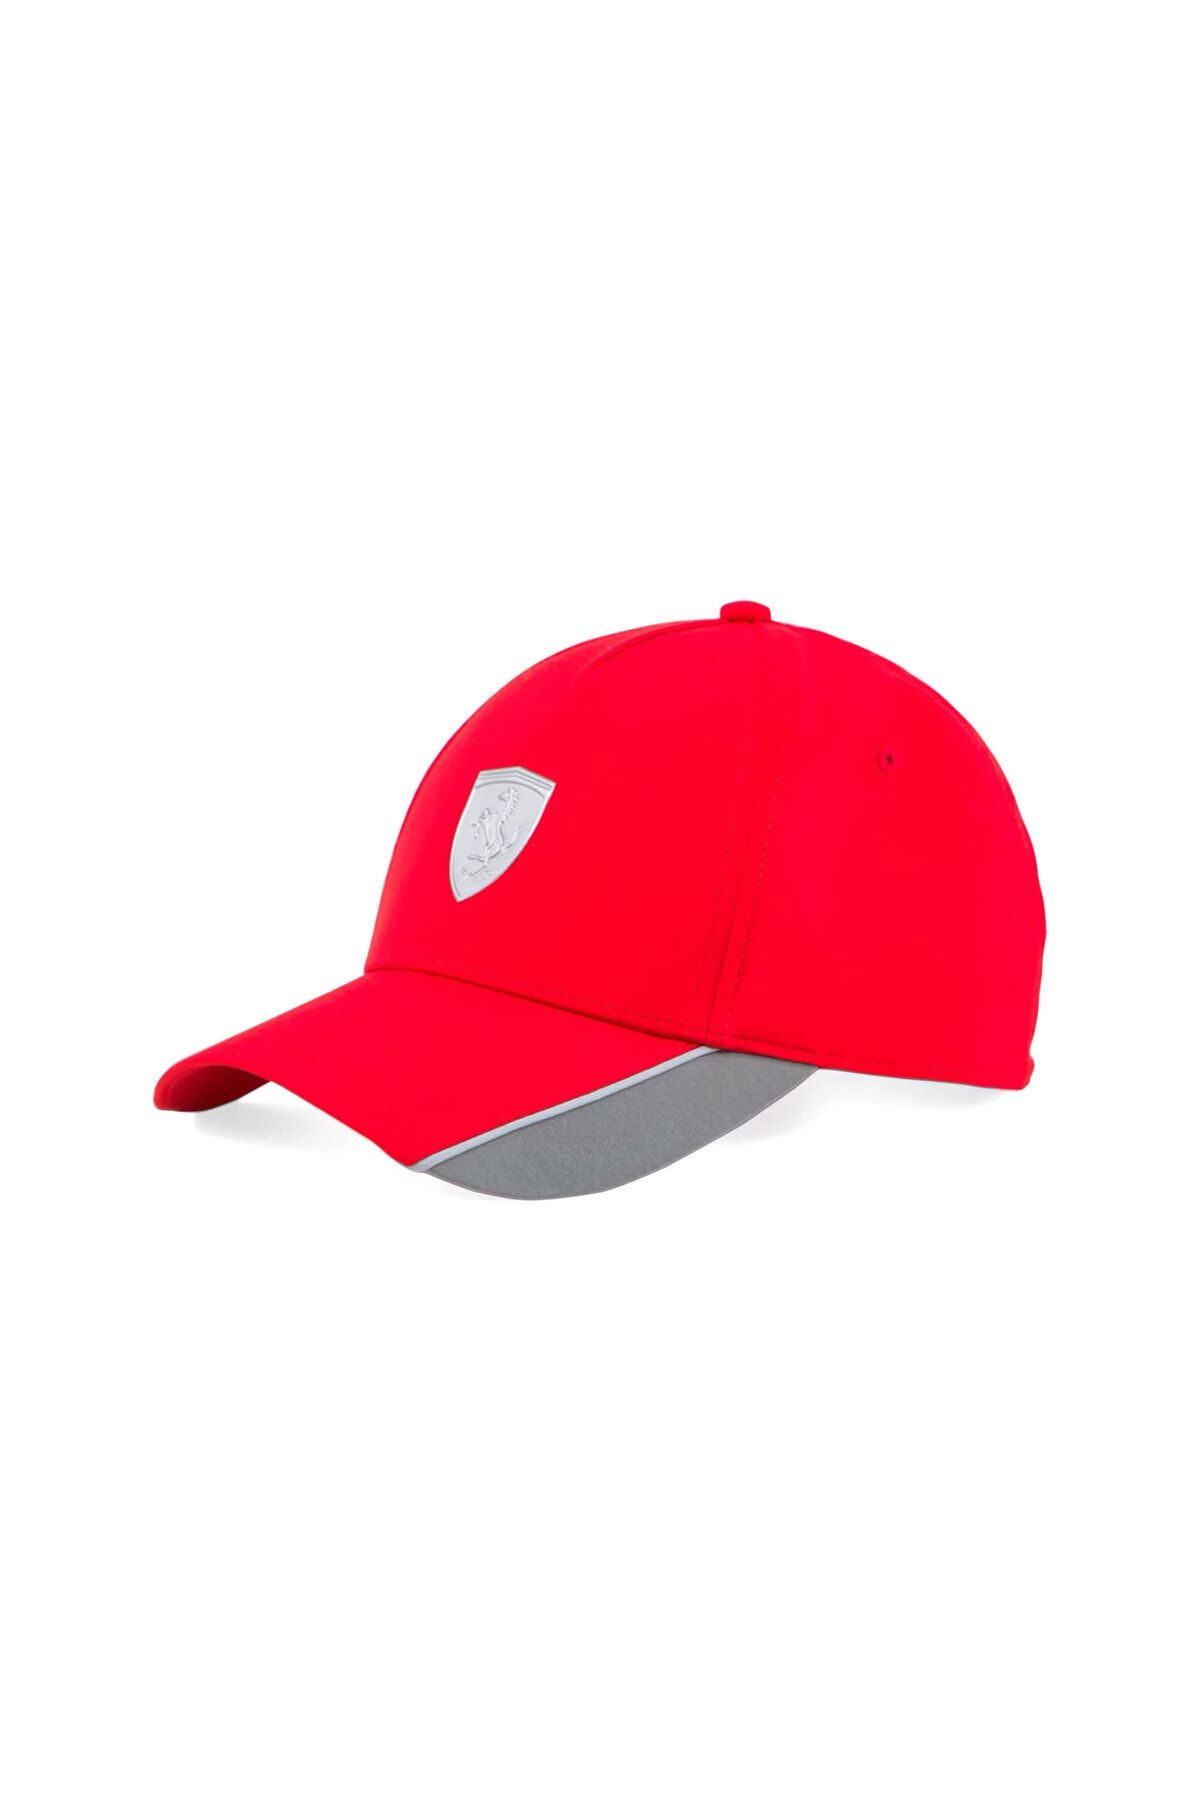 Puma Ferrari Sptwr Monochrome Bb Cap Şapka 2446801 Kırmızı